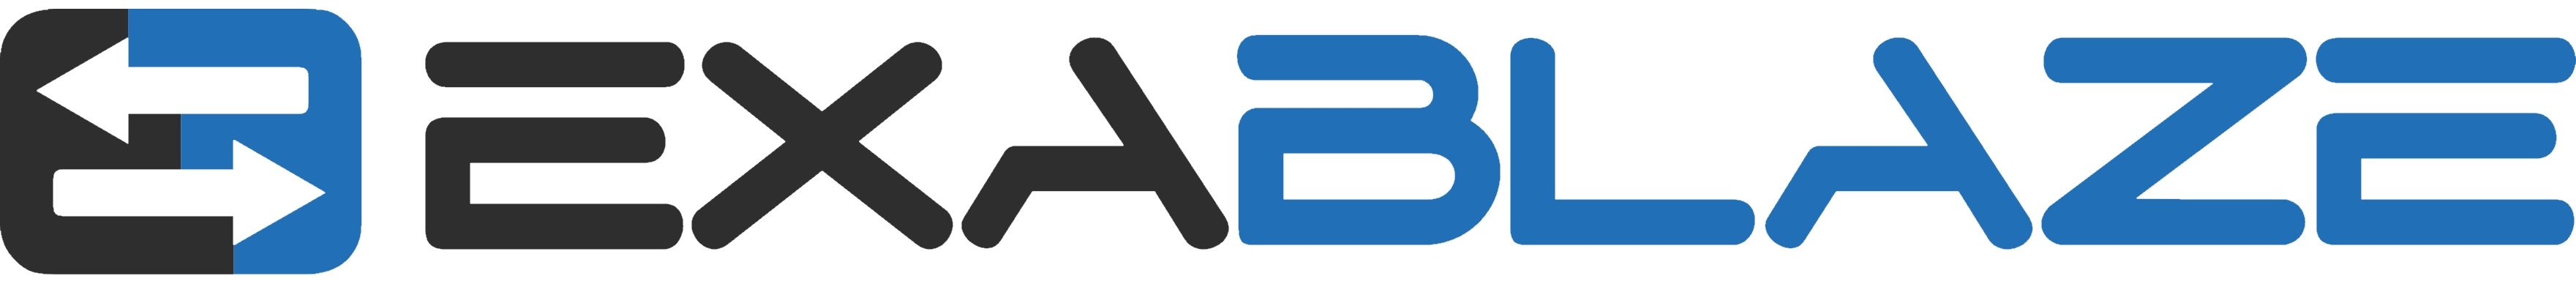 Exablaze logo